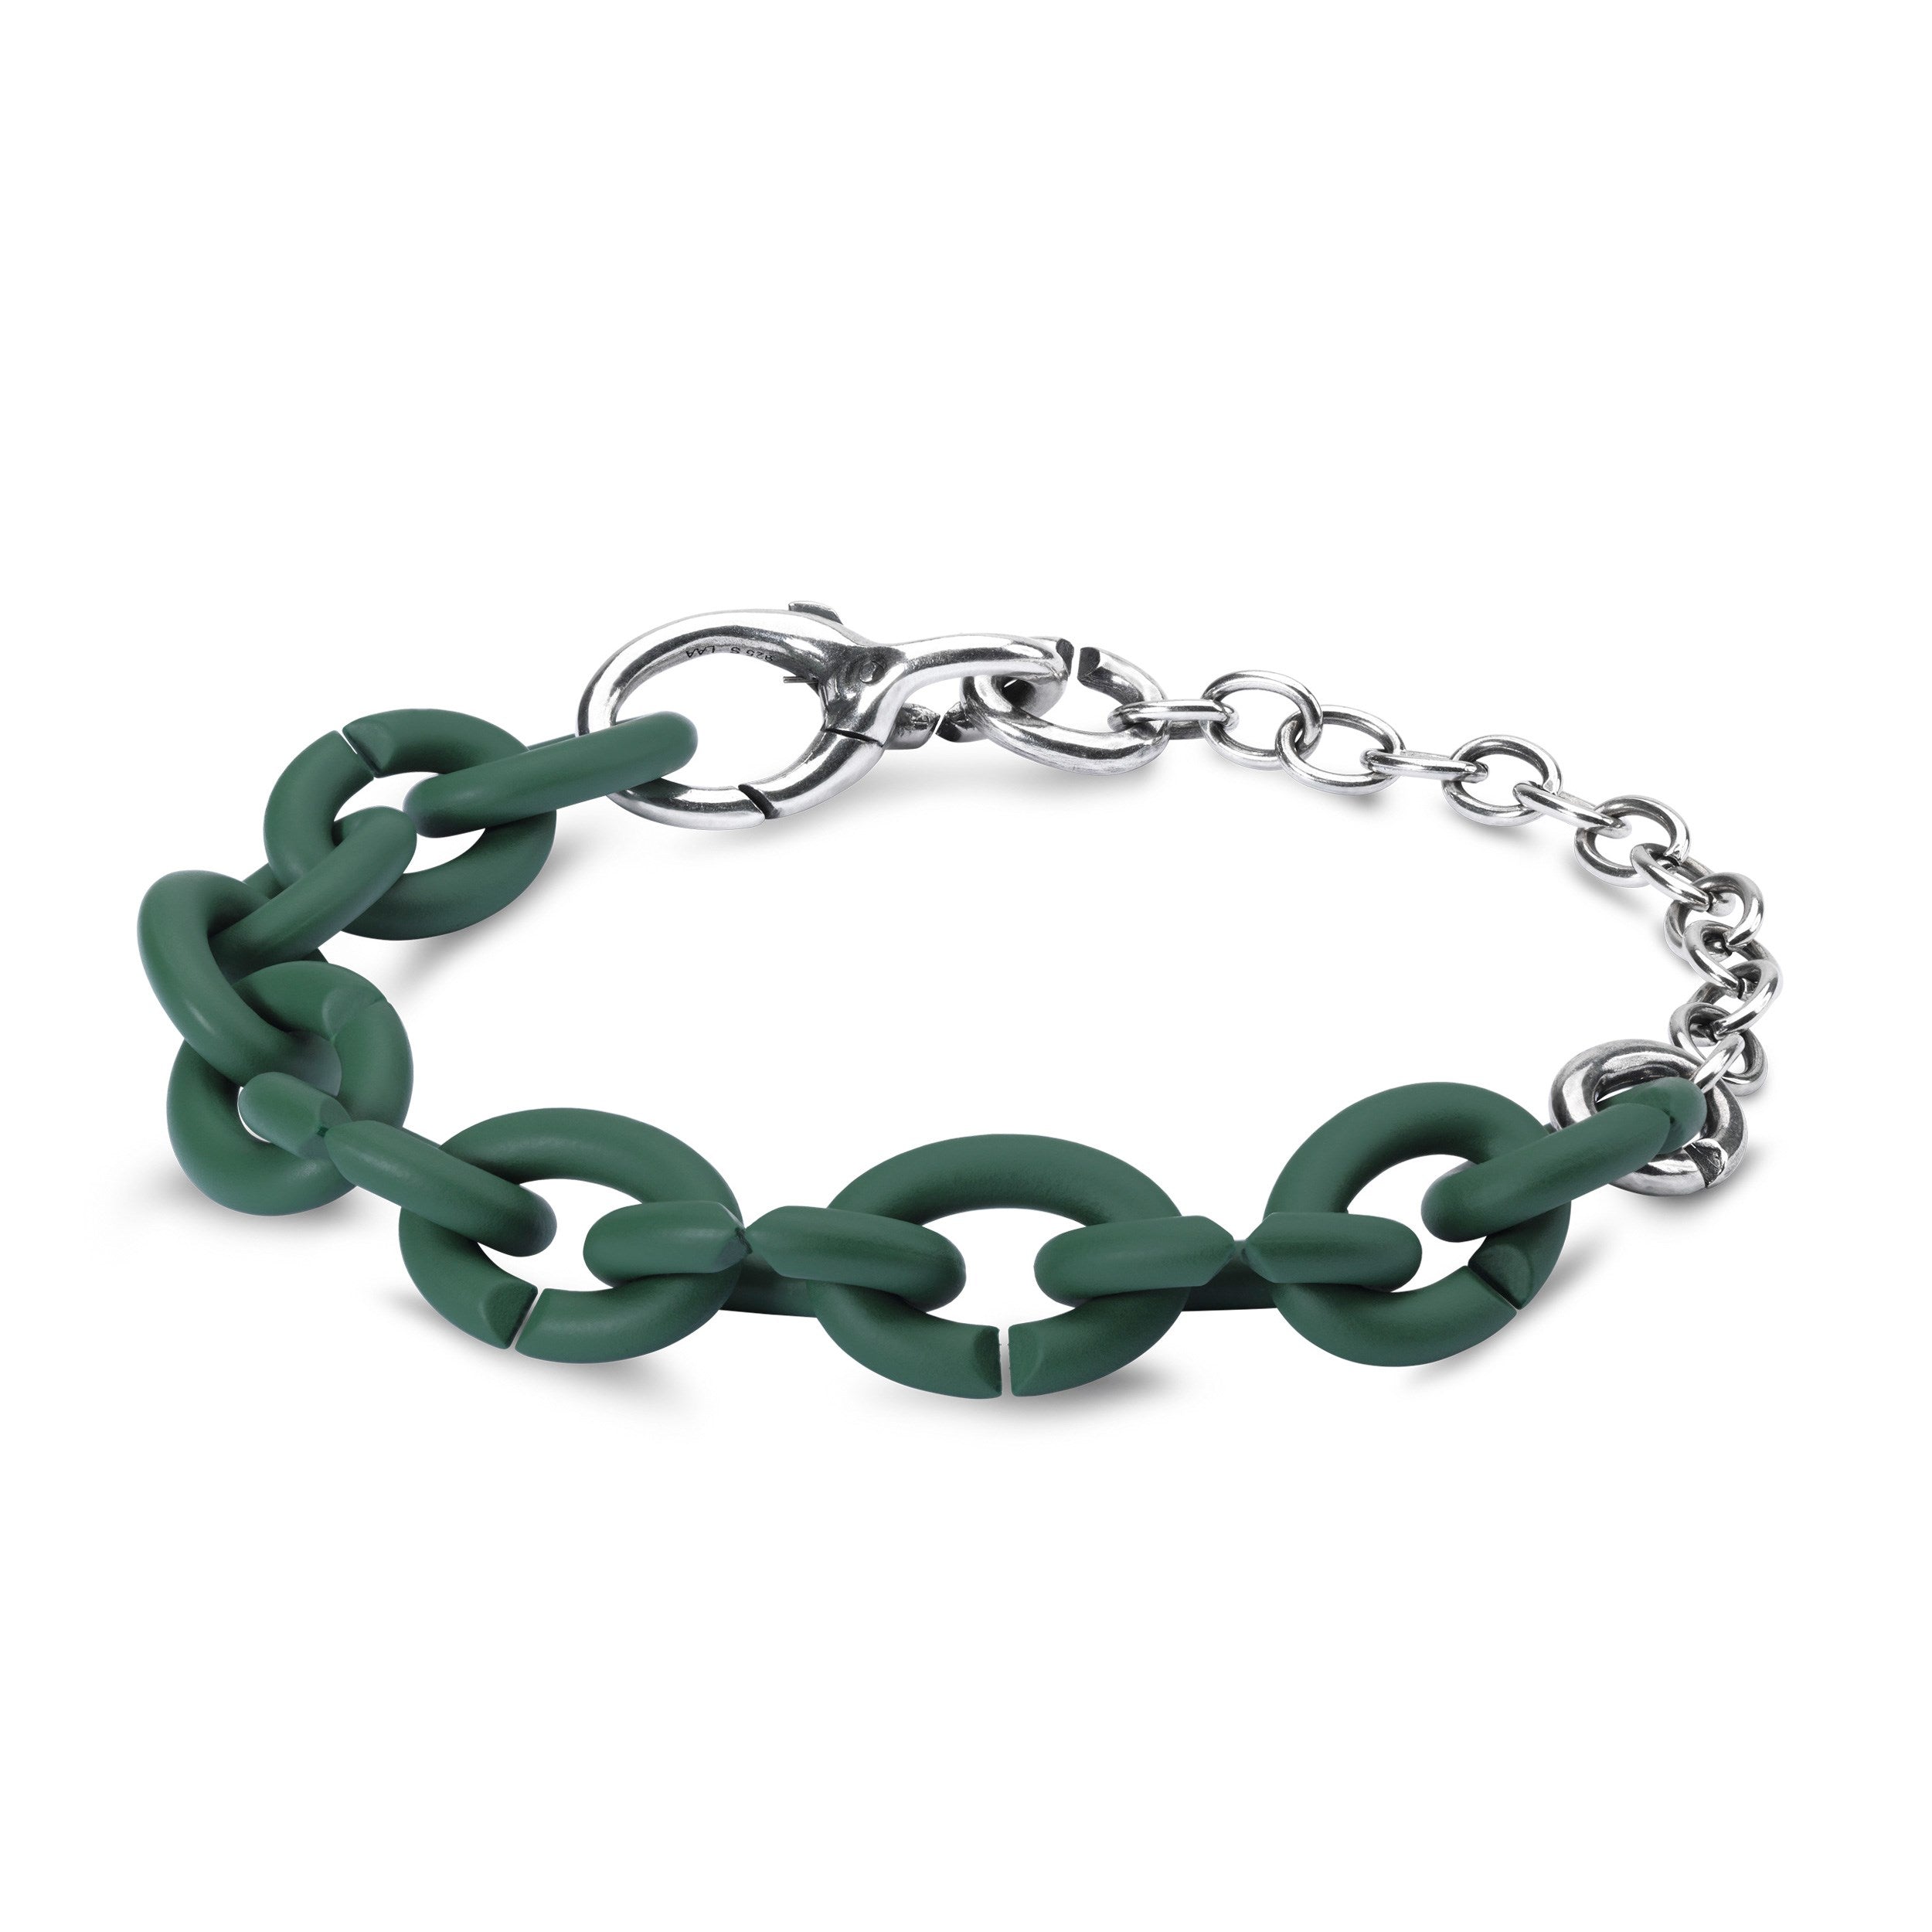 Keen Green Chain Bracelet, 19 cm